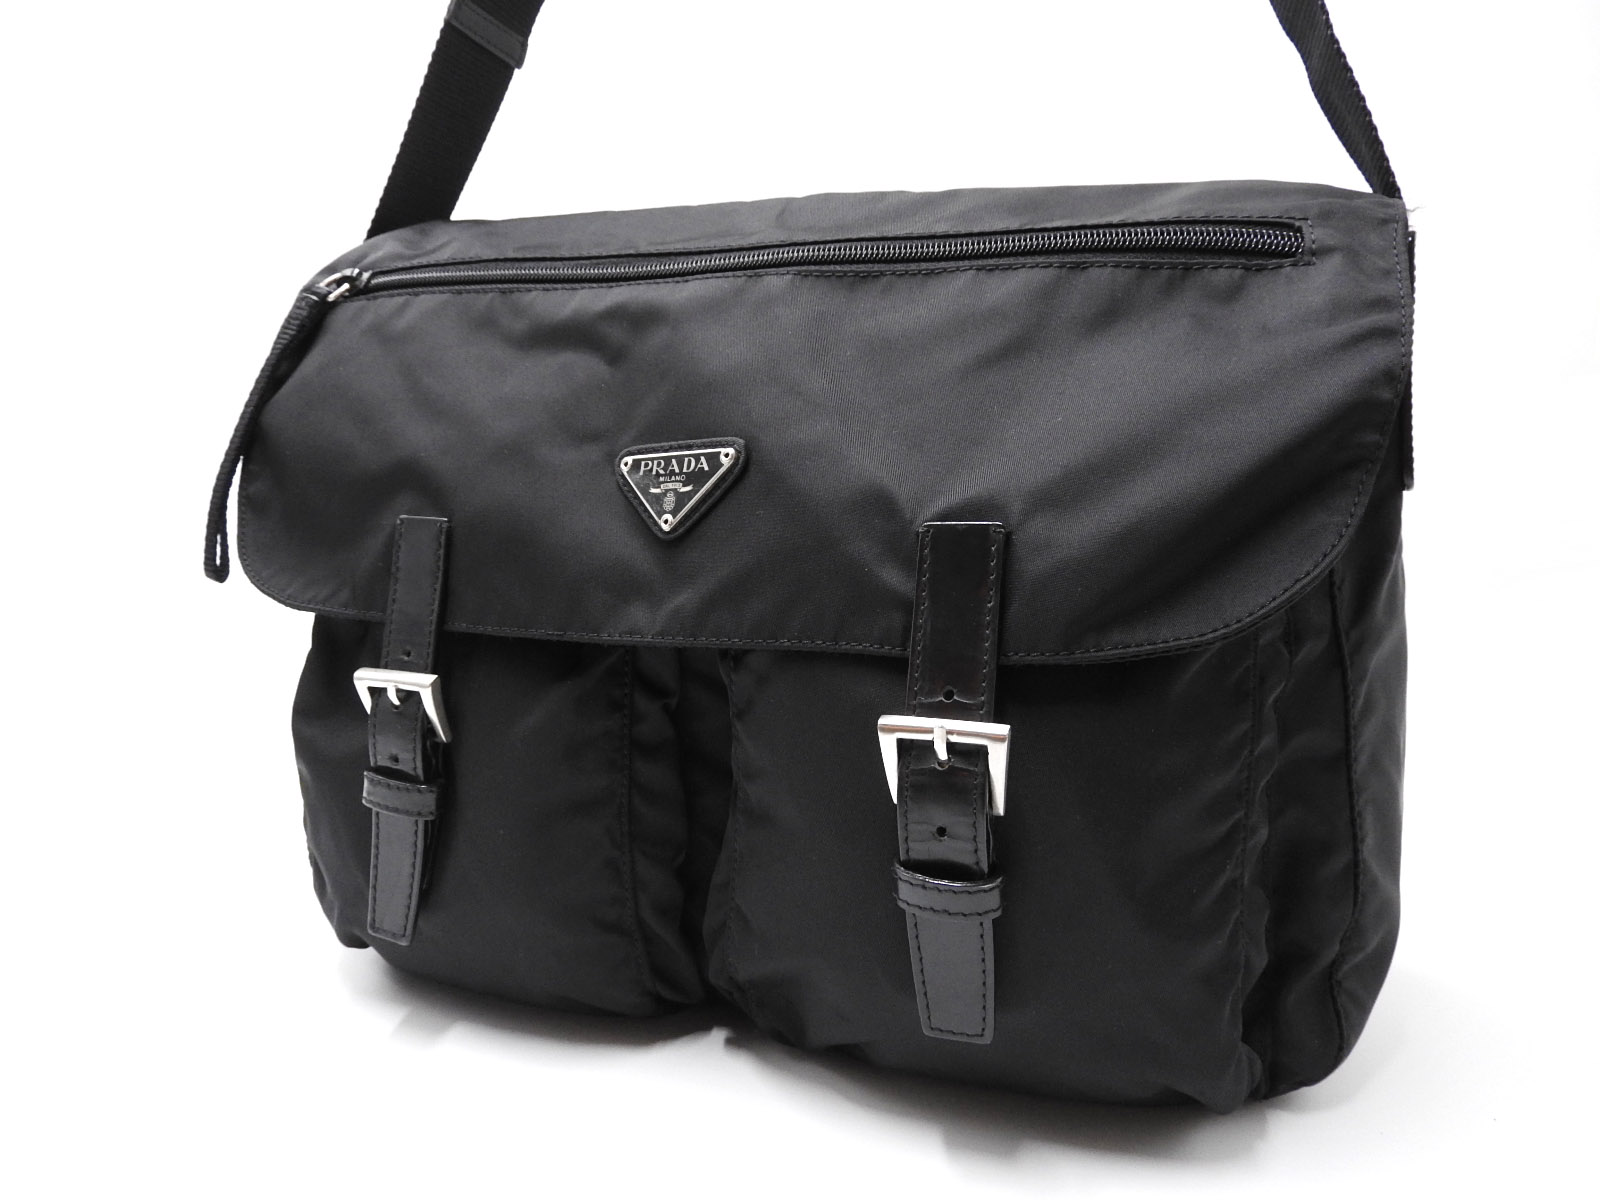 Prada Bag in Vela Fabric and Black Leather Bag -  India